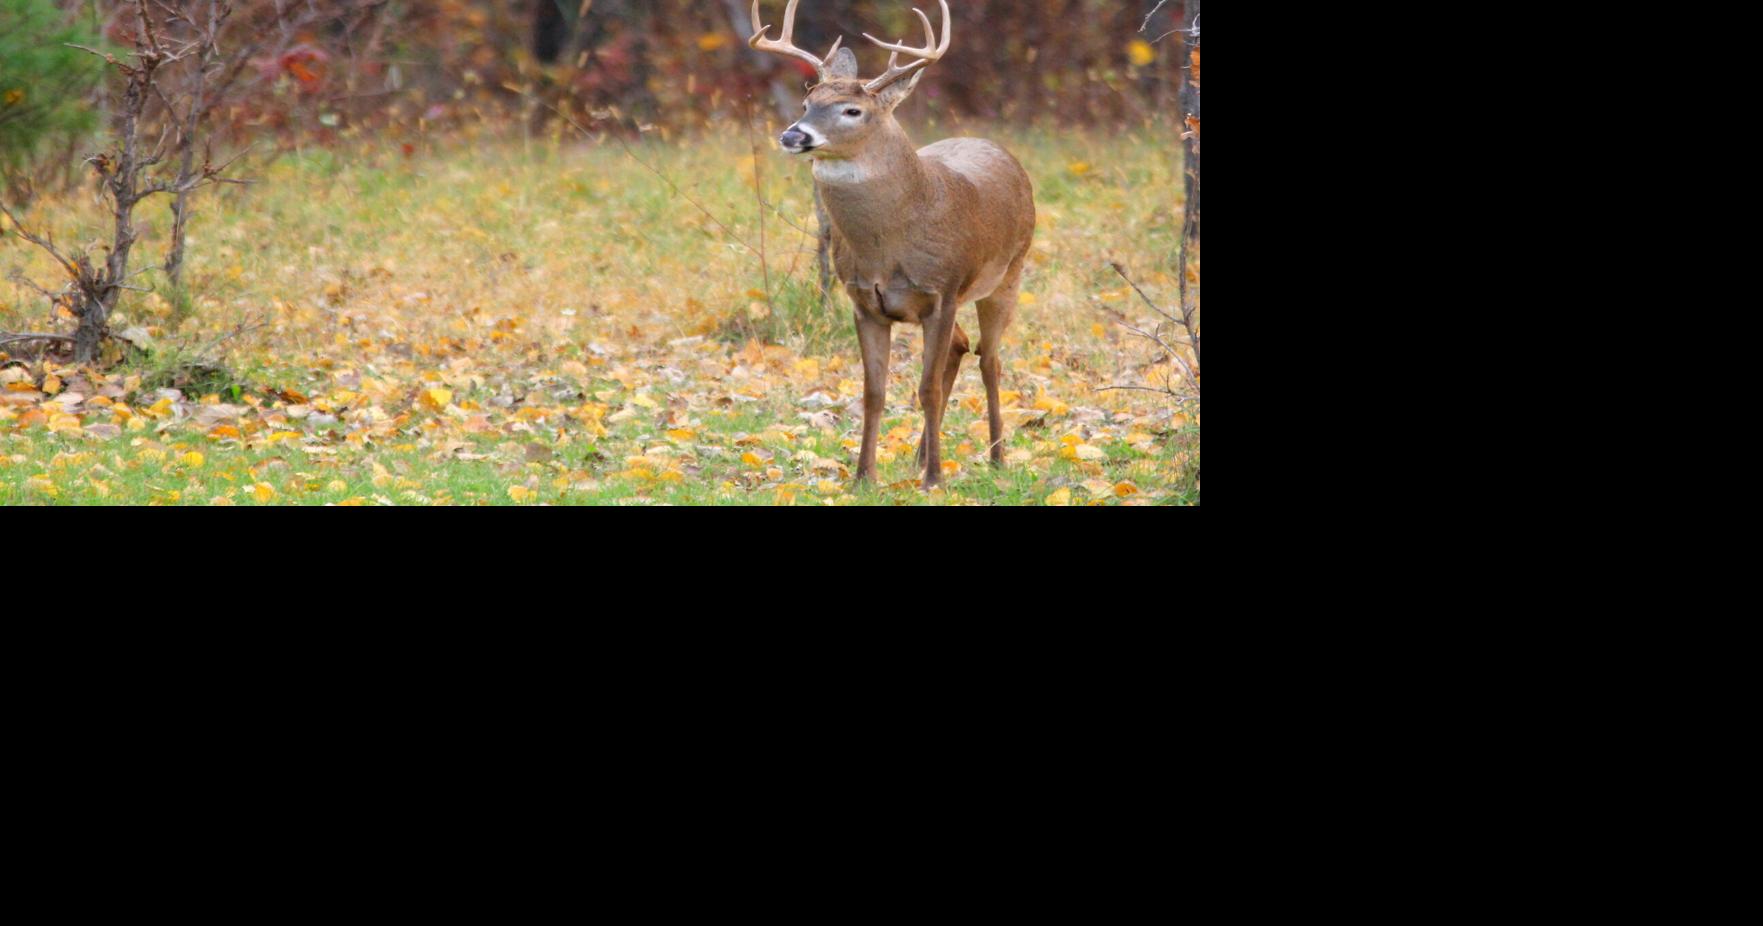 kicks gun hunters season successful off place as Western for in right harvest Wisconsin deer